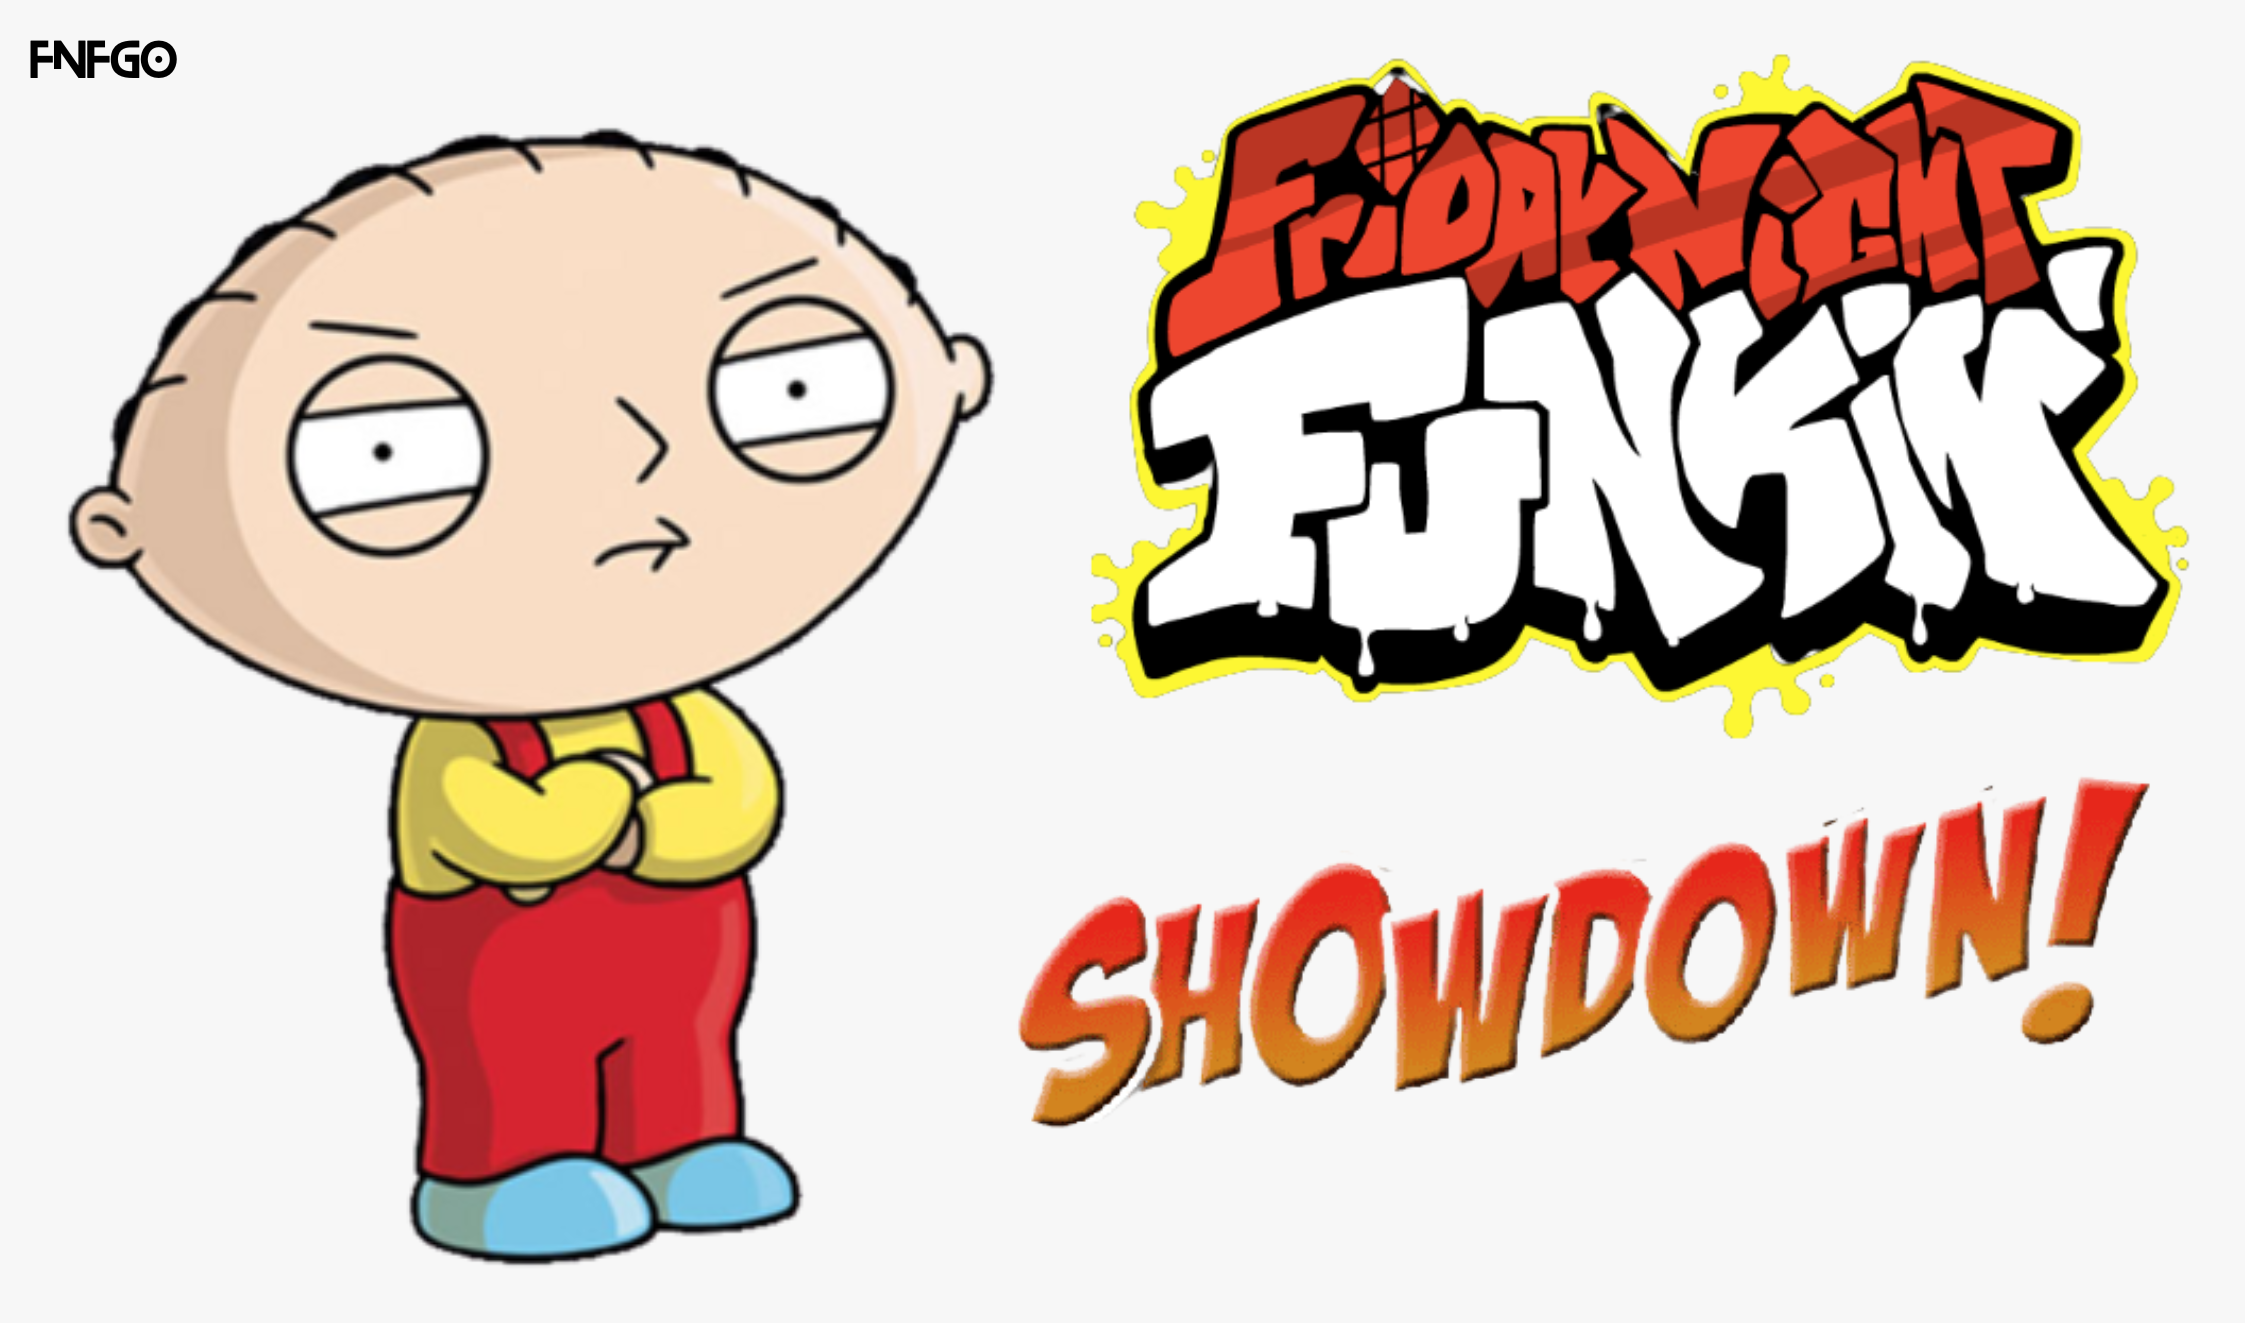 Pibby Family Guy 360° FNF Animation. 